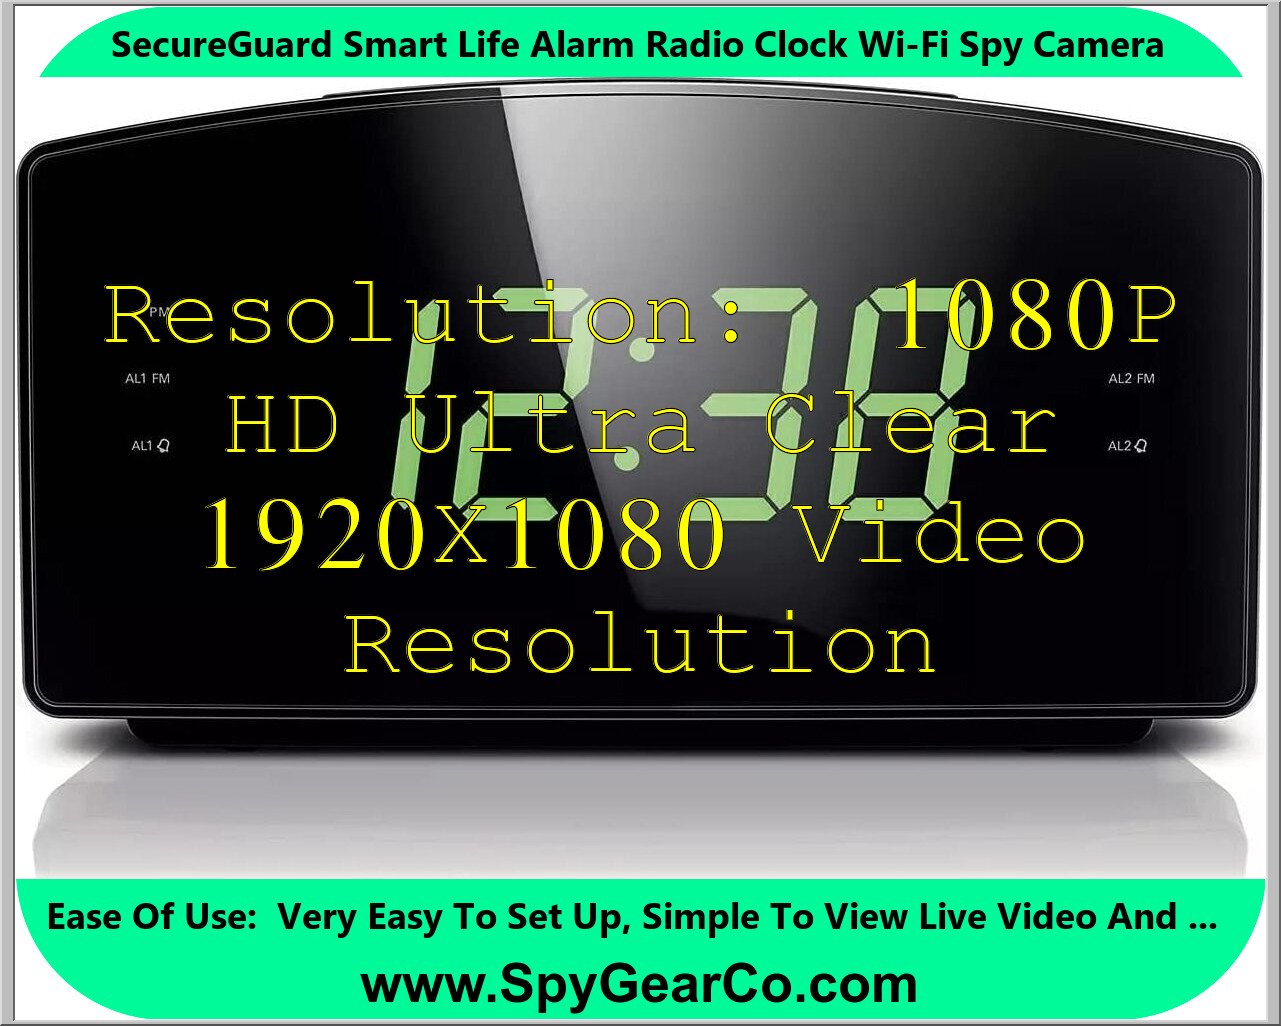 SecureGuard Smart Life Alarm Radio Clock Wi-Fi Spy Camera